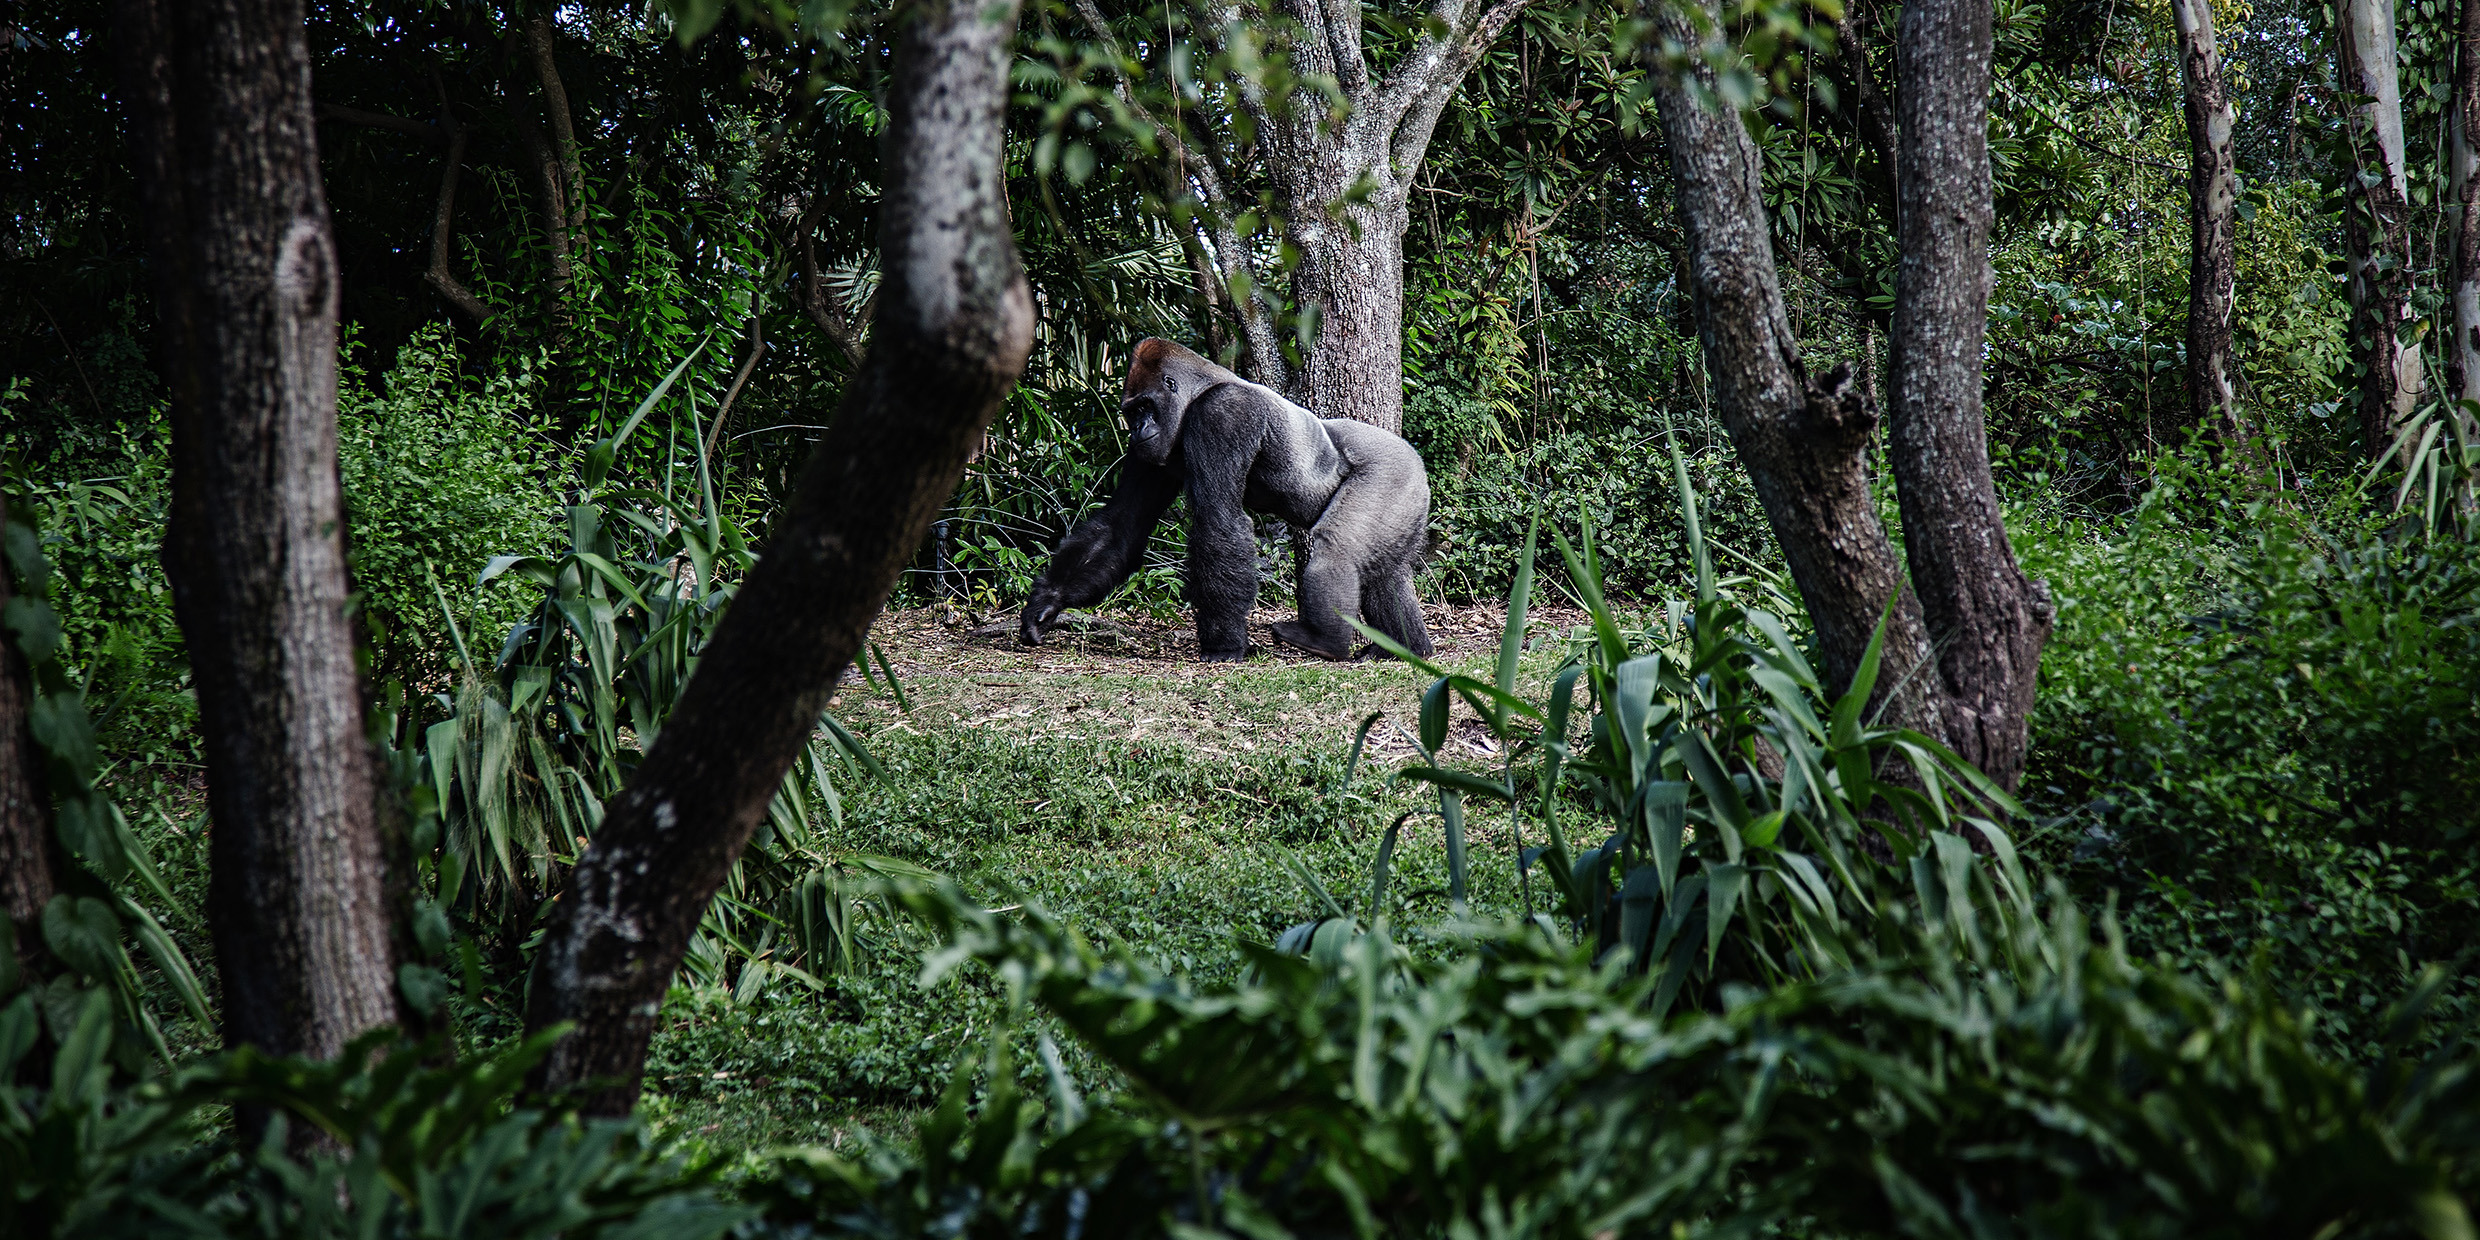 Image of gorilla in jungle